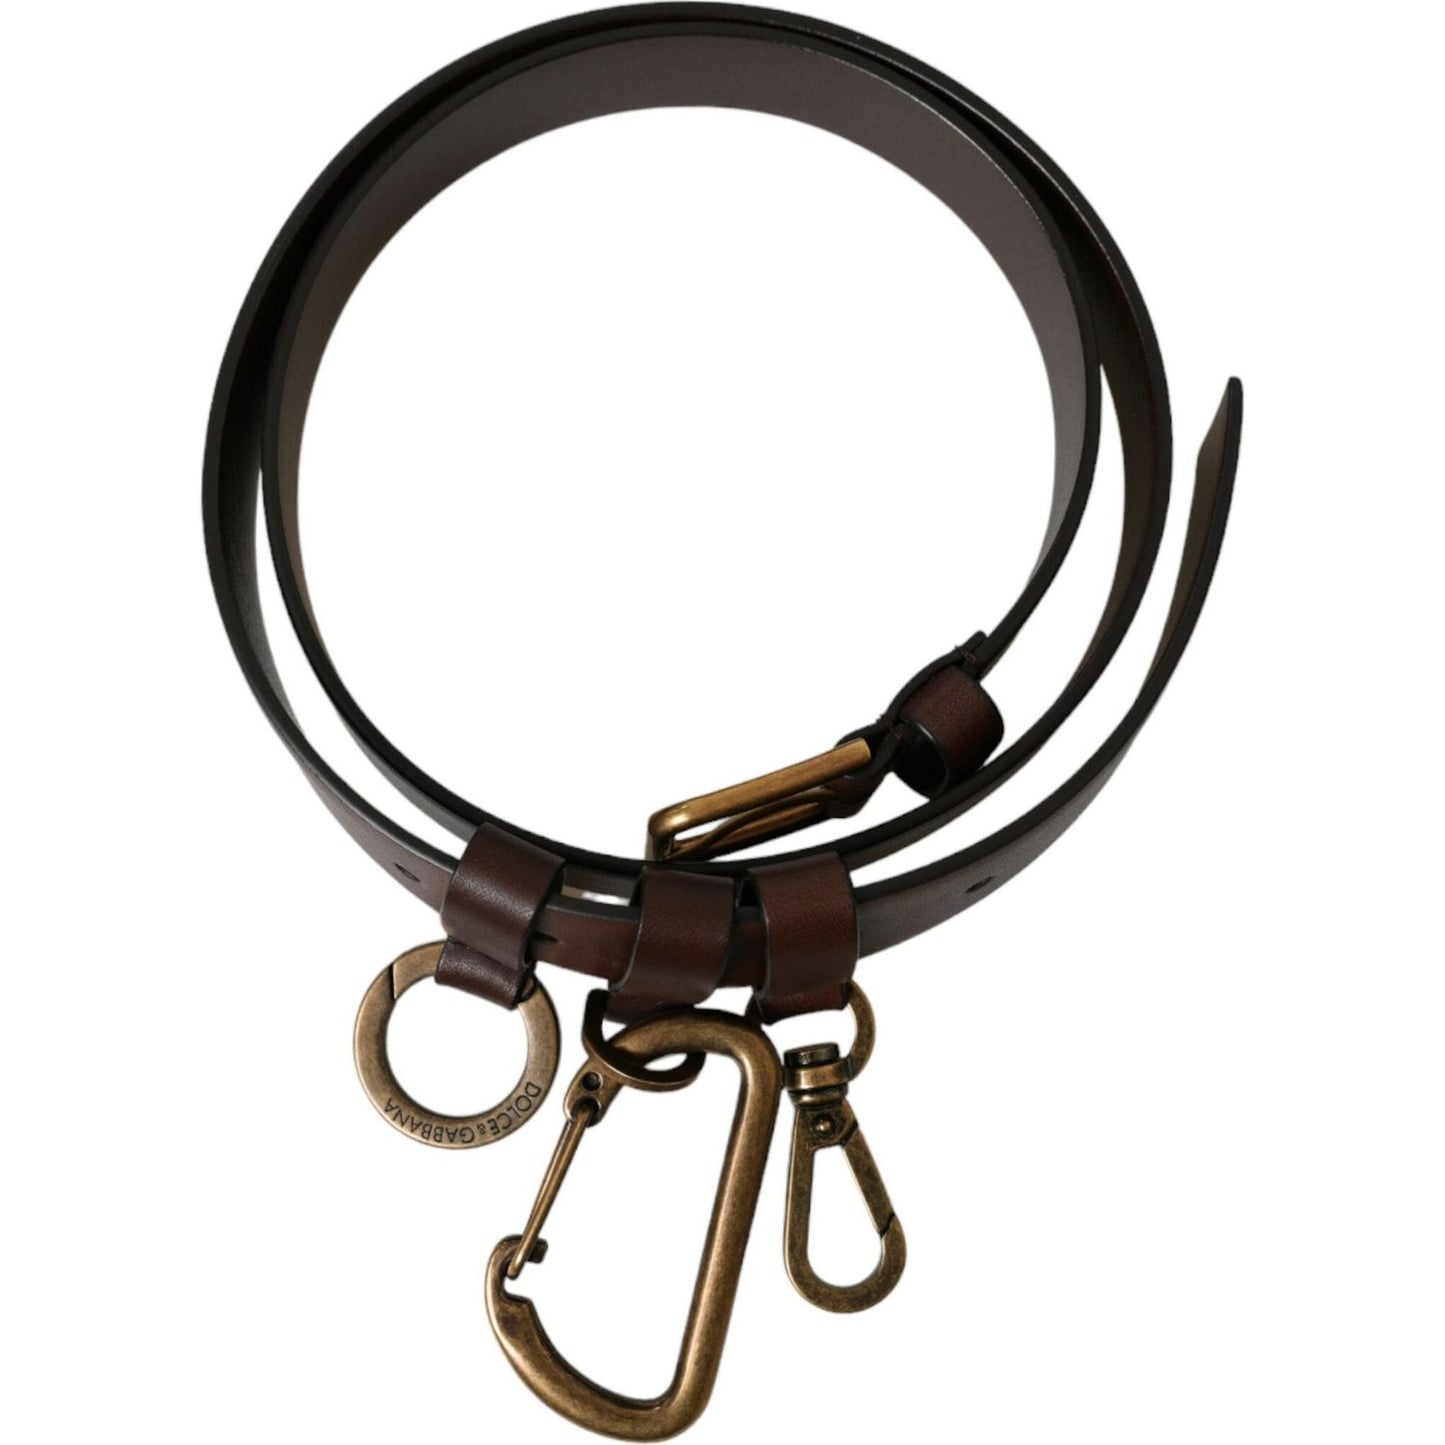 Dolce & Gabbana Elegant Brown Calf Leather Belt - Timeless Accessory elegant-brown-calf-leather-belt-timeless-accessory